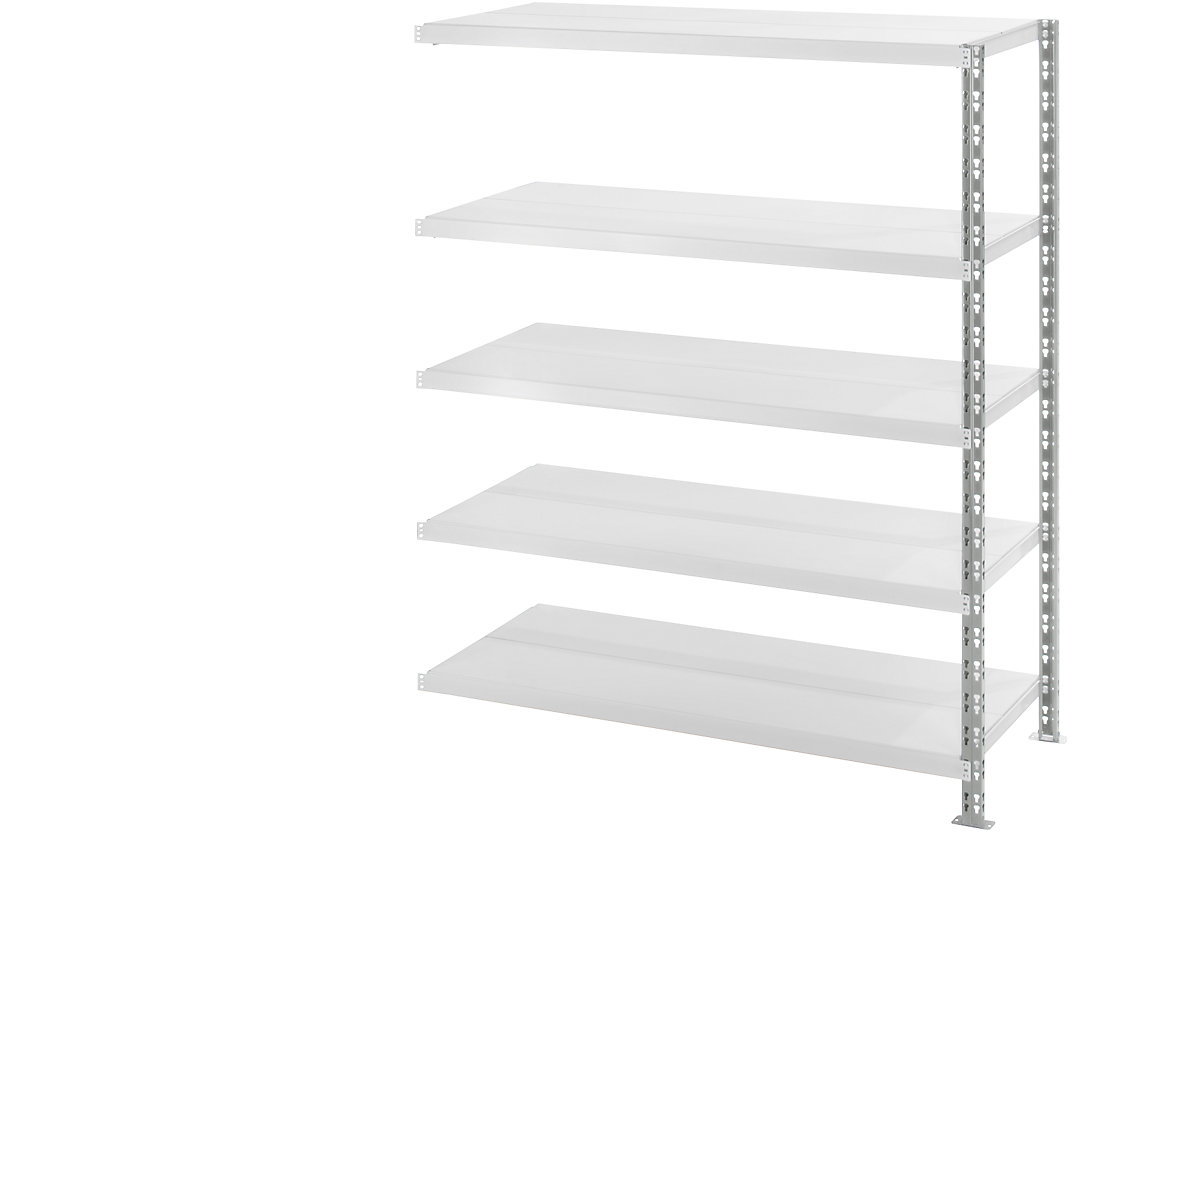 Wide span shelf unit with sheet steel shelves, depth 700 mm, extension shelf unit, HxW 1820 x 1525 mm